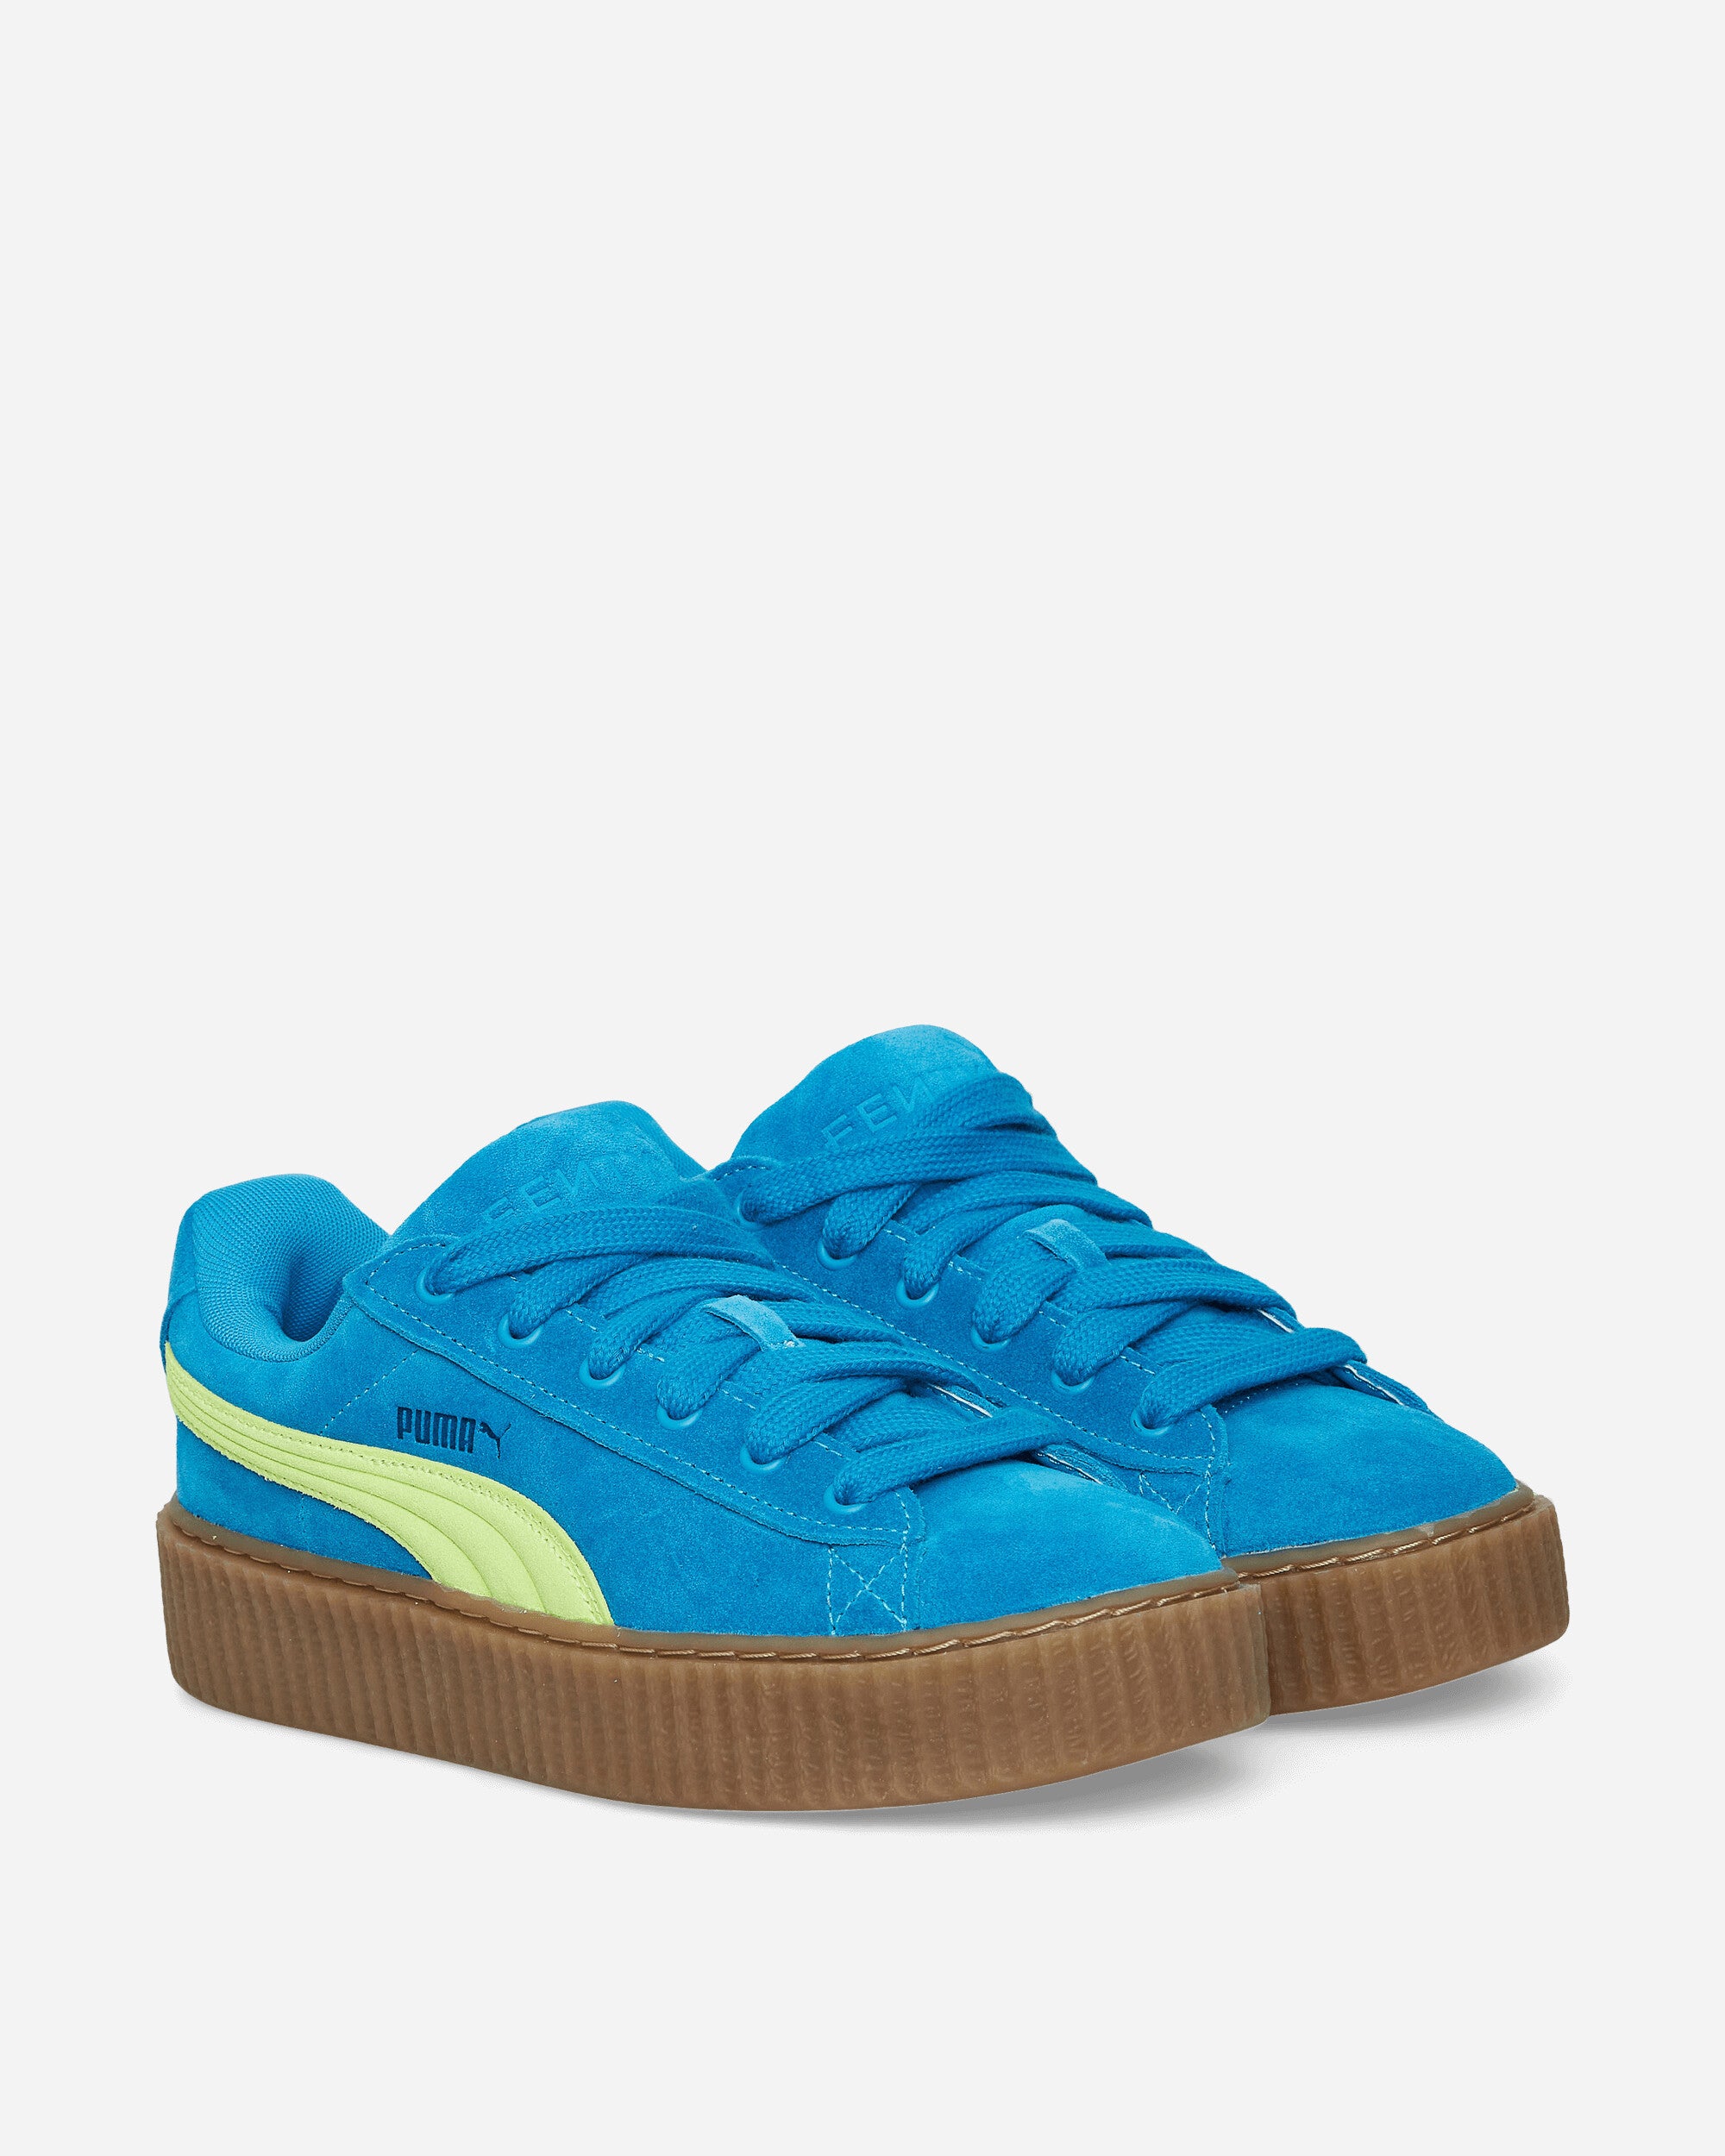 FENTY Creeper Phatty Sneakers Speed Blue / Lime Pow